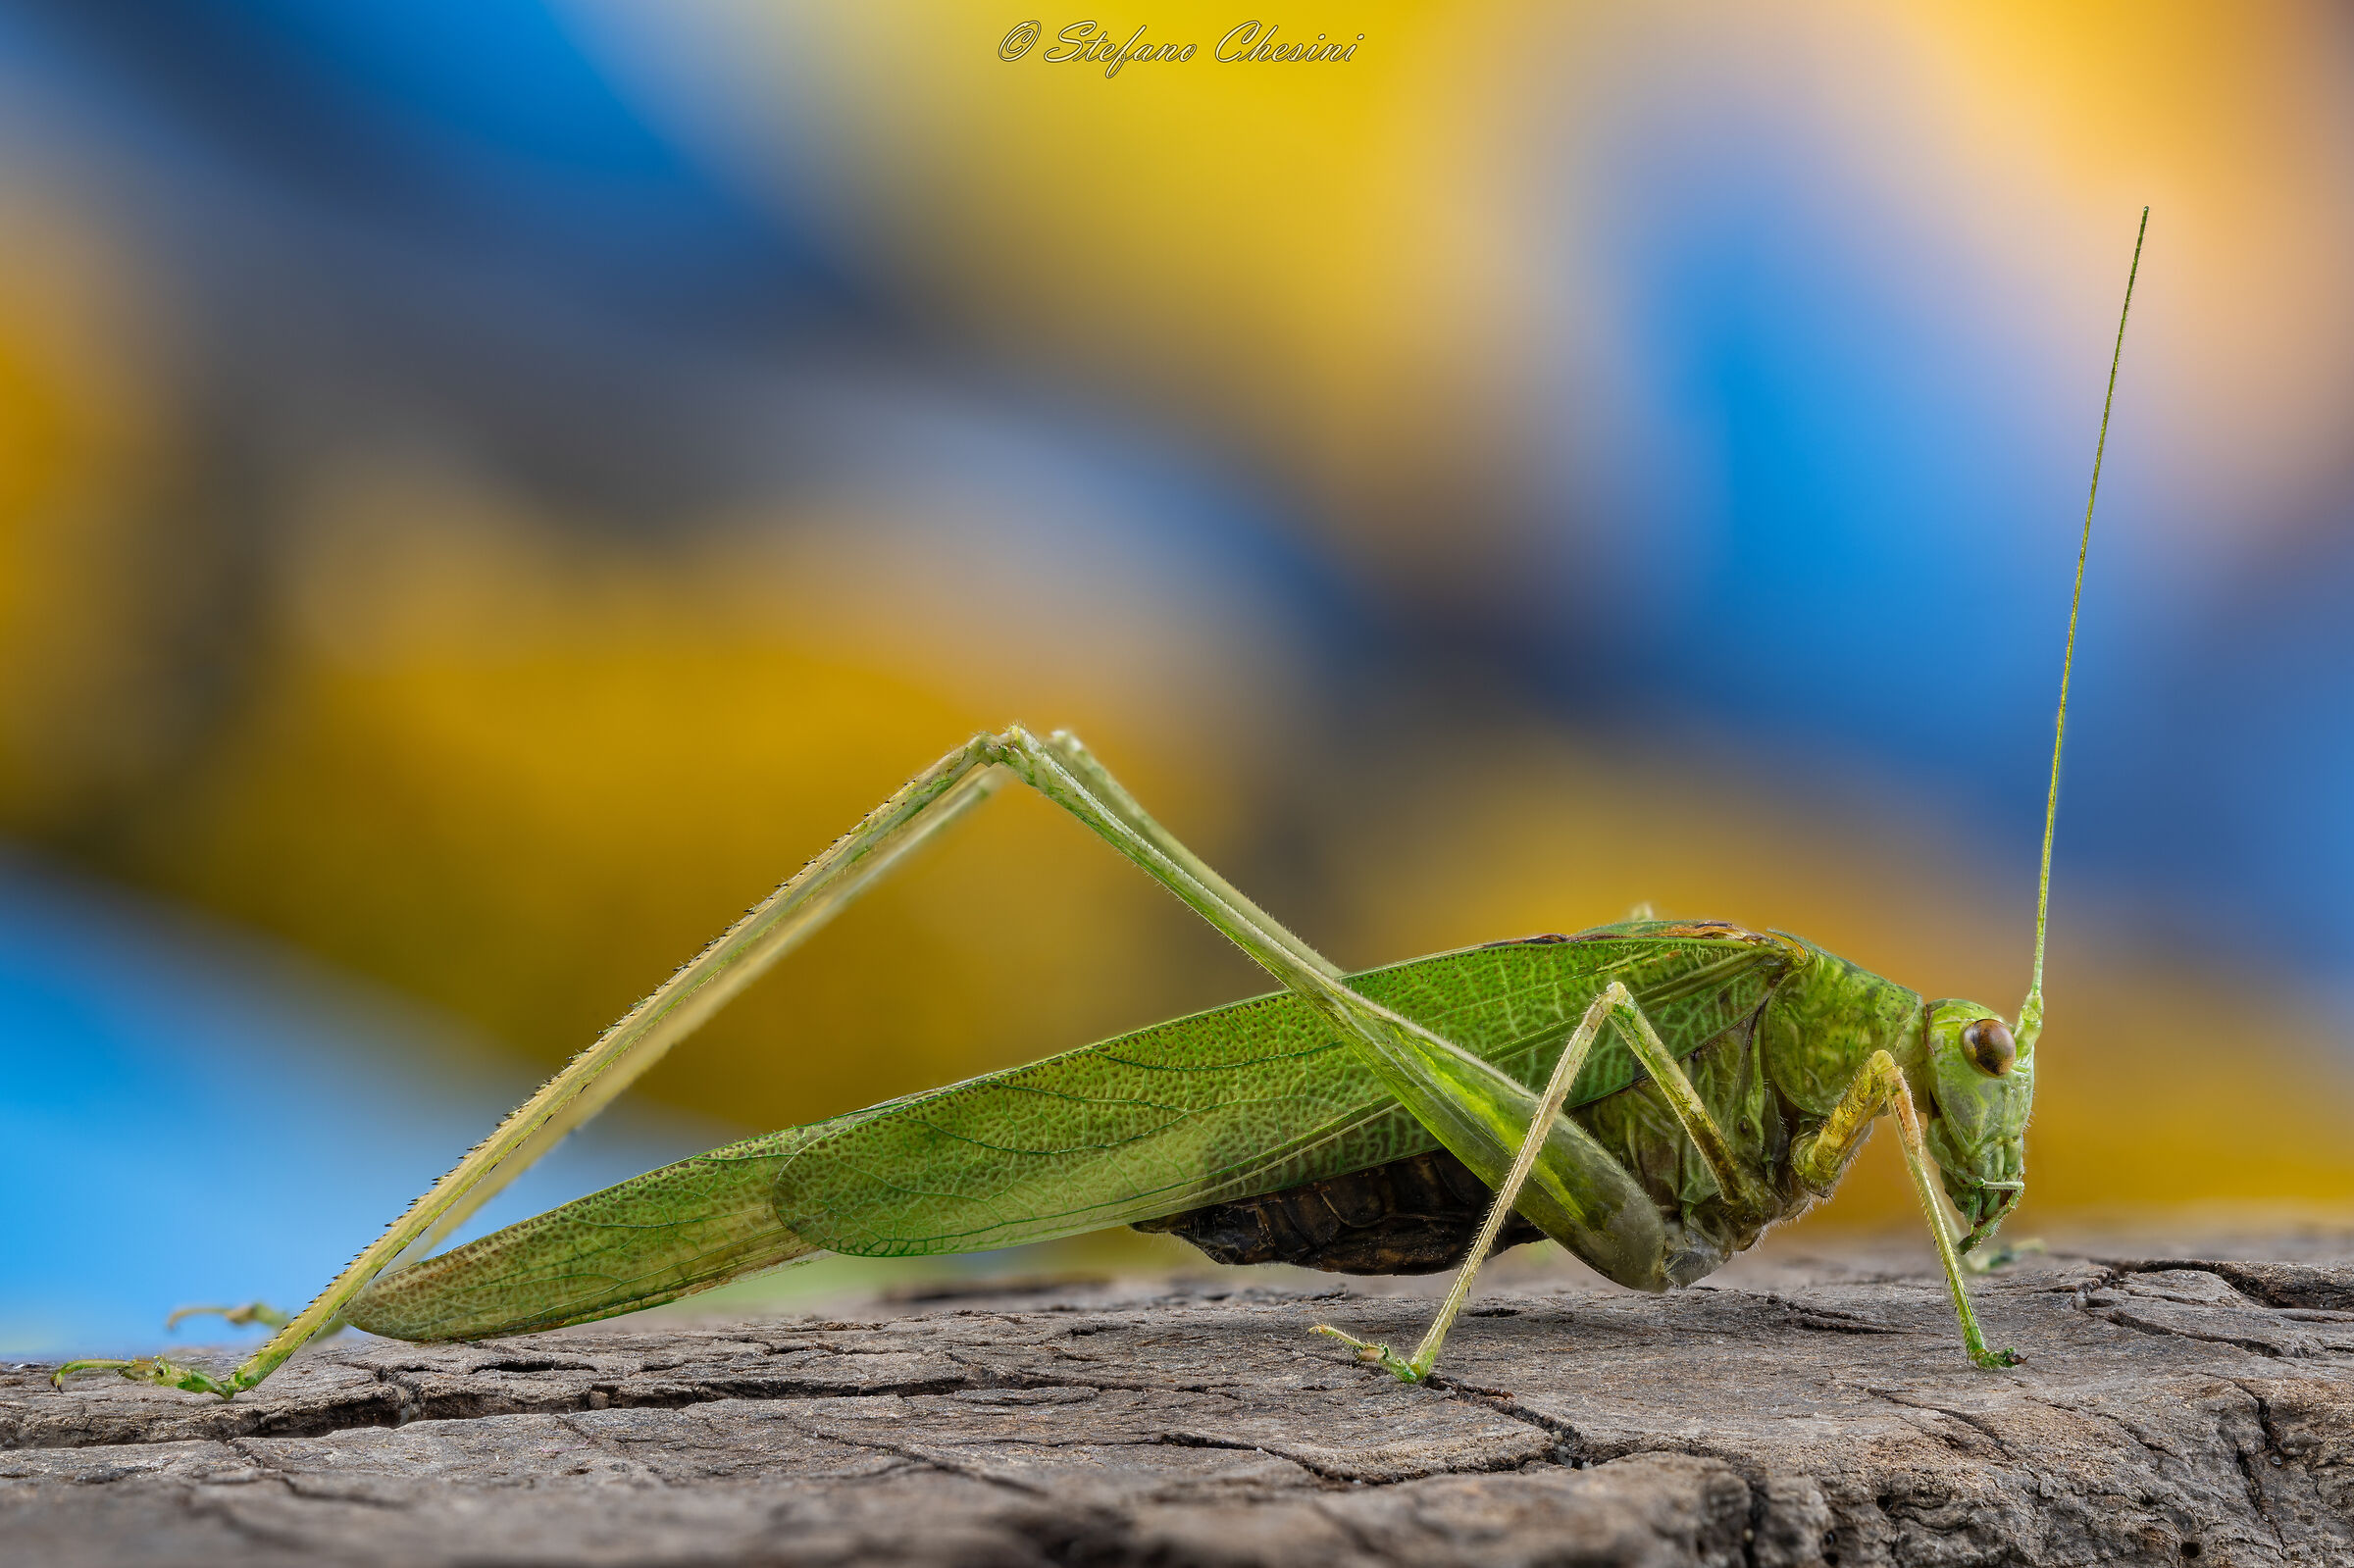 Grasshopper superstar...